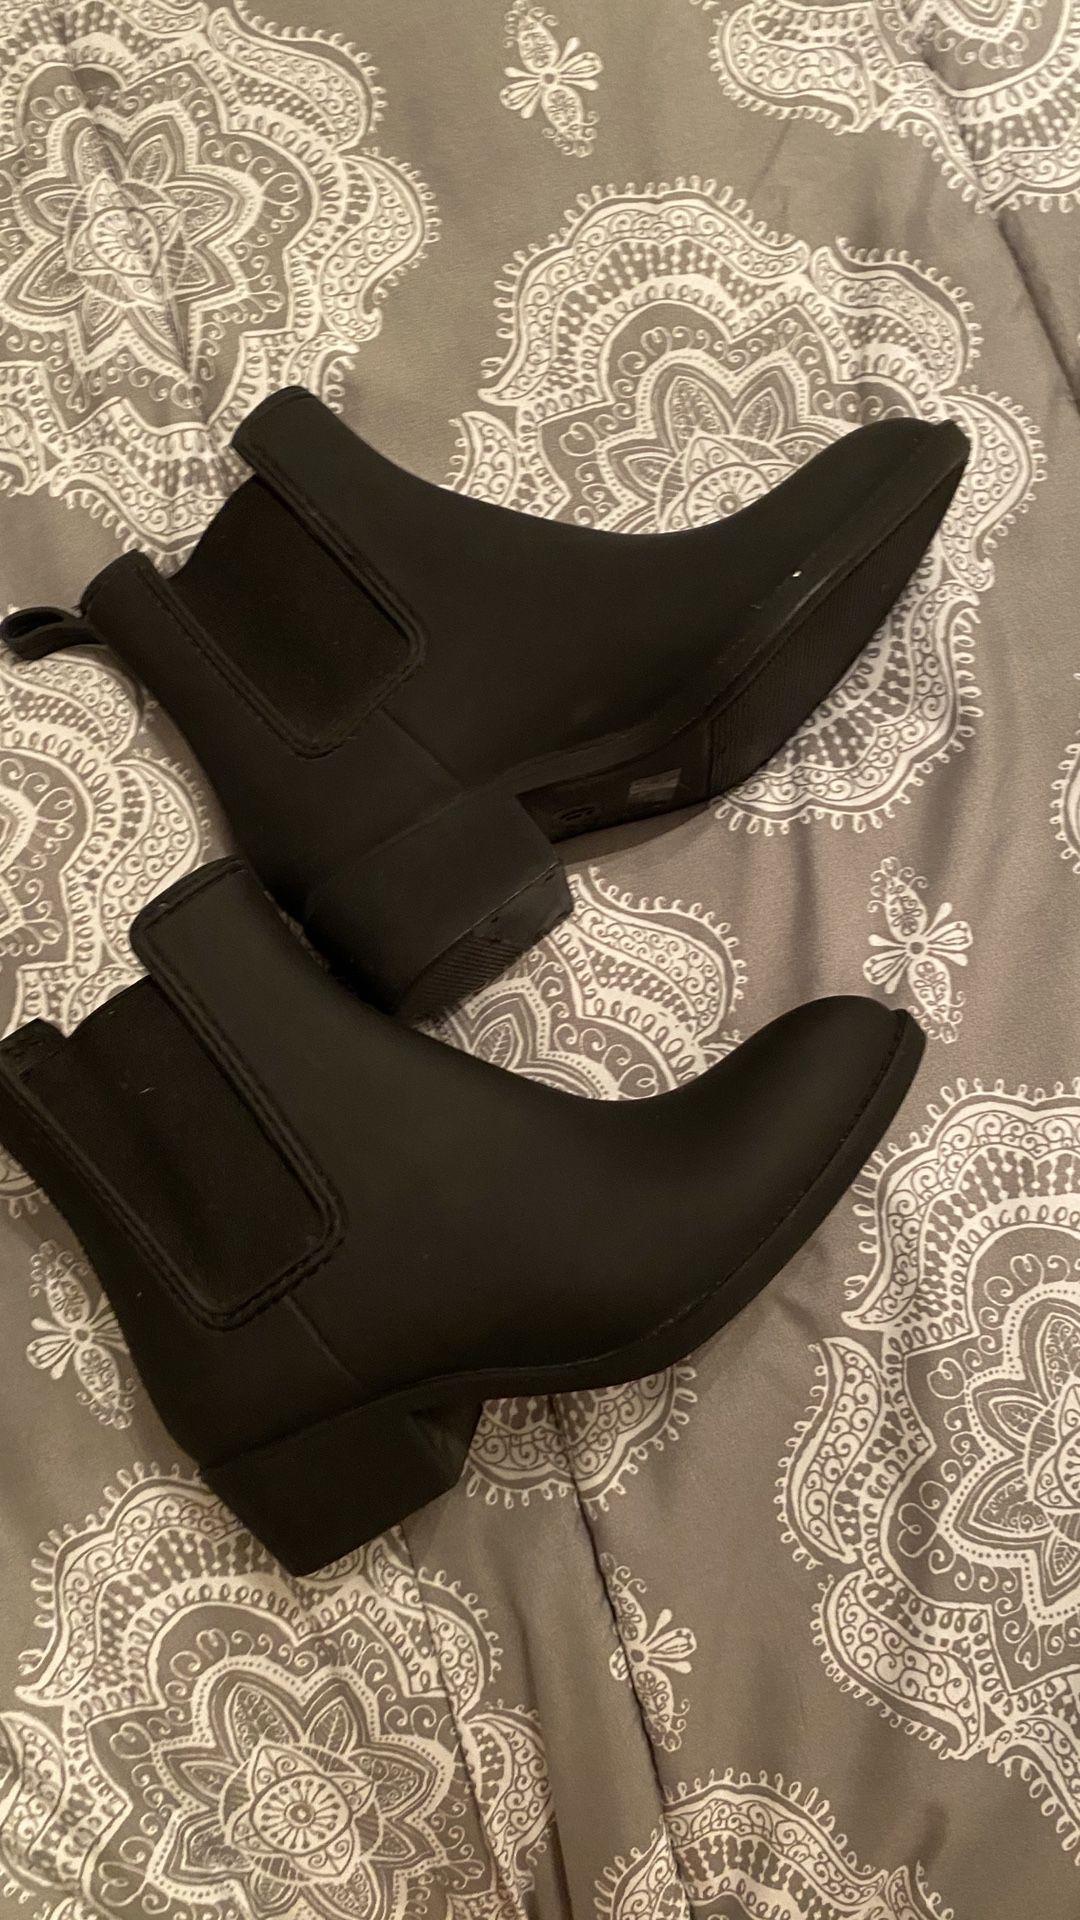 Jeffrey Campbell rain boots size US 6